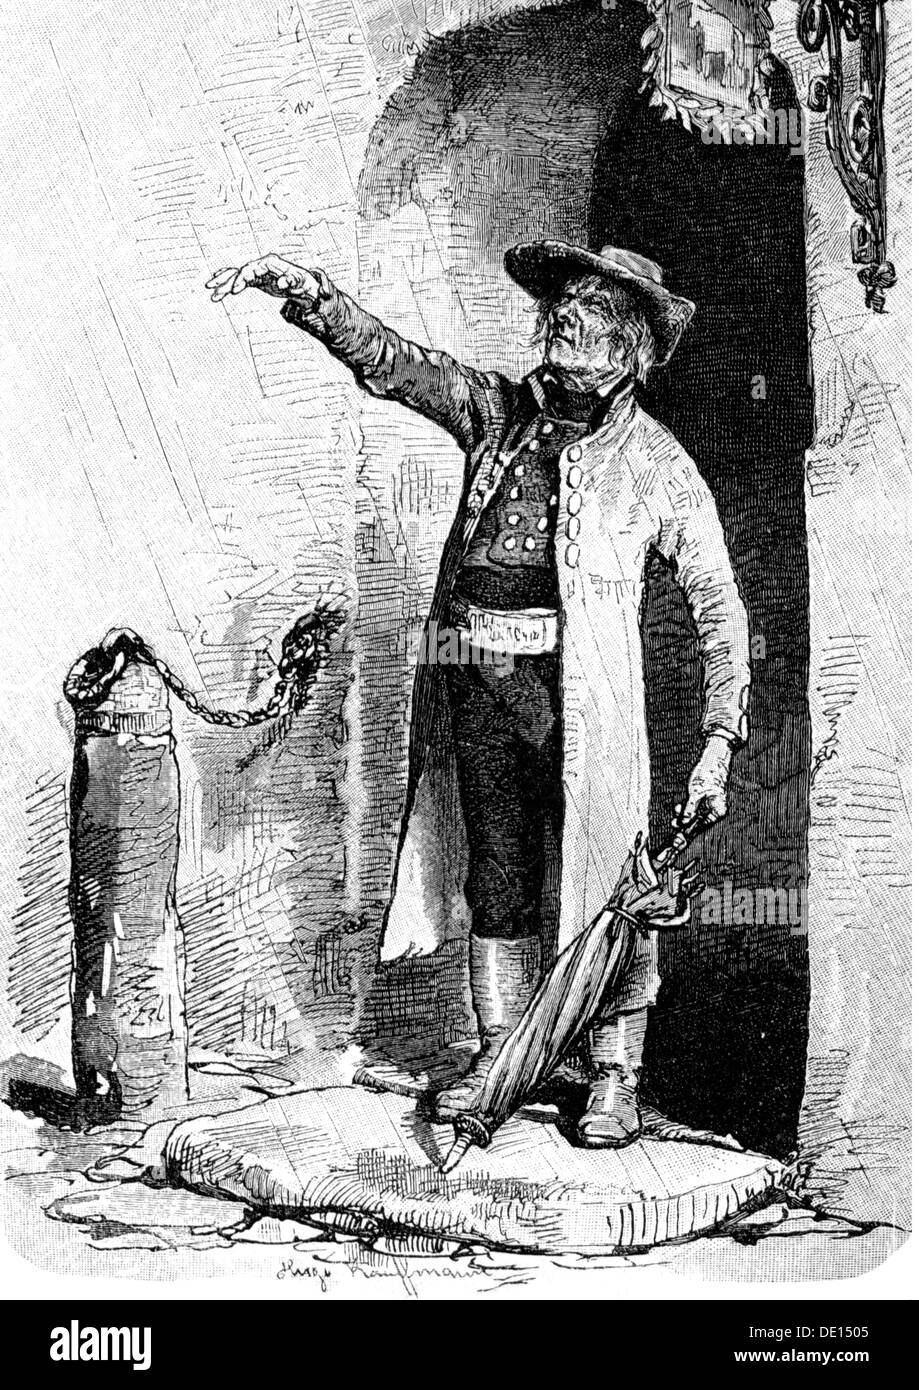 Moda, accesorios, 'Grund zum Bleiben' (razón para quedarse), dibujo de Hugo Kauffmann (1844 - 1915), siglo 19, Derechos adicionales-Clearences-no disponible Foto de stock